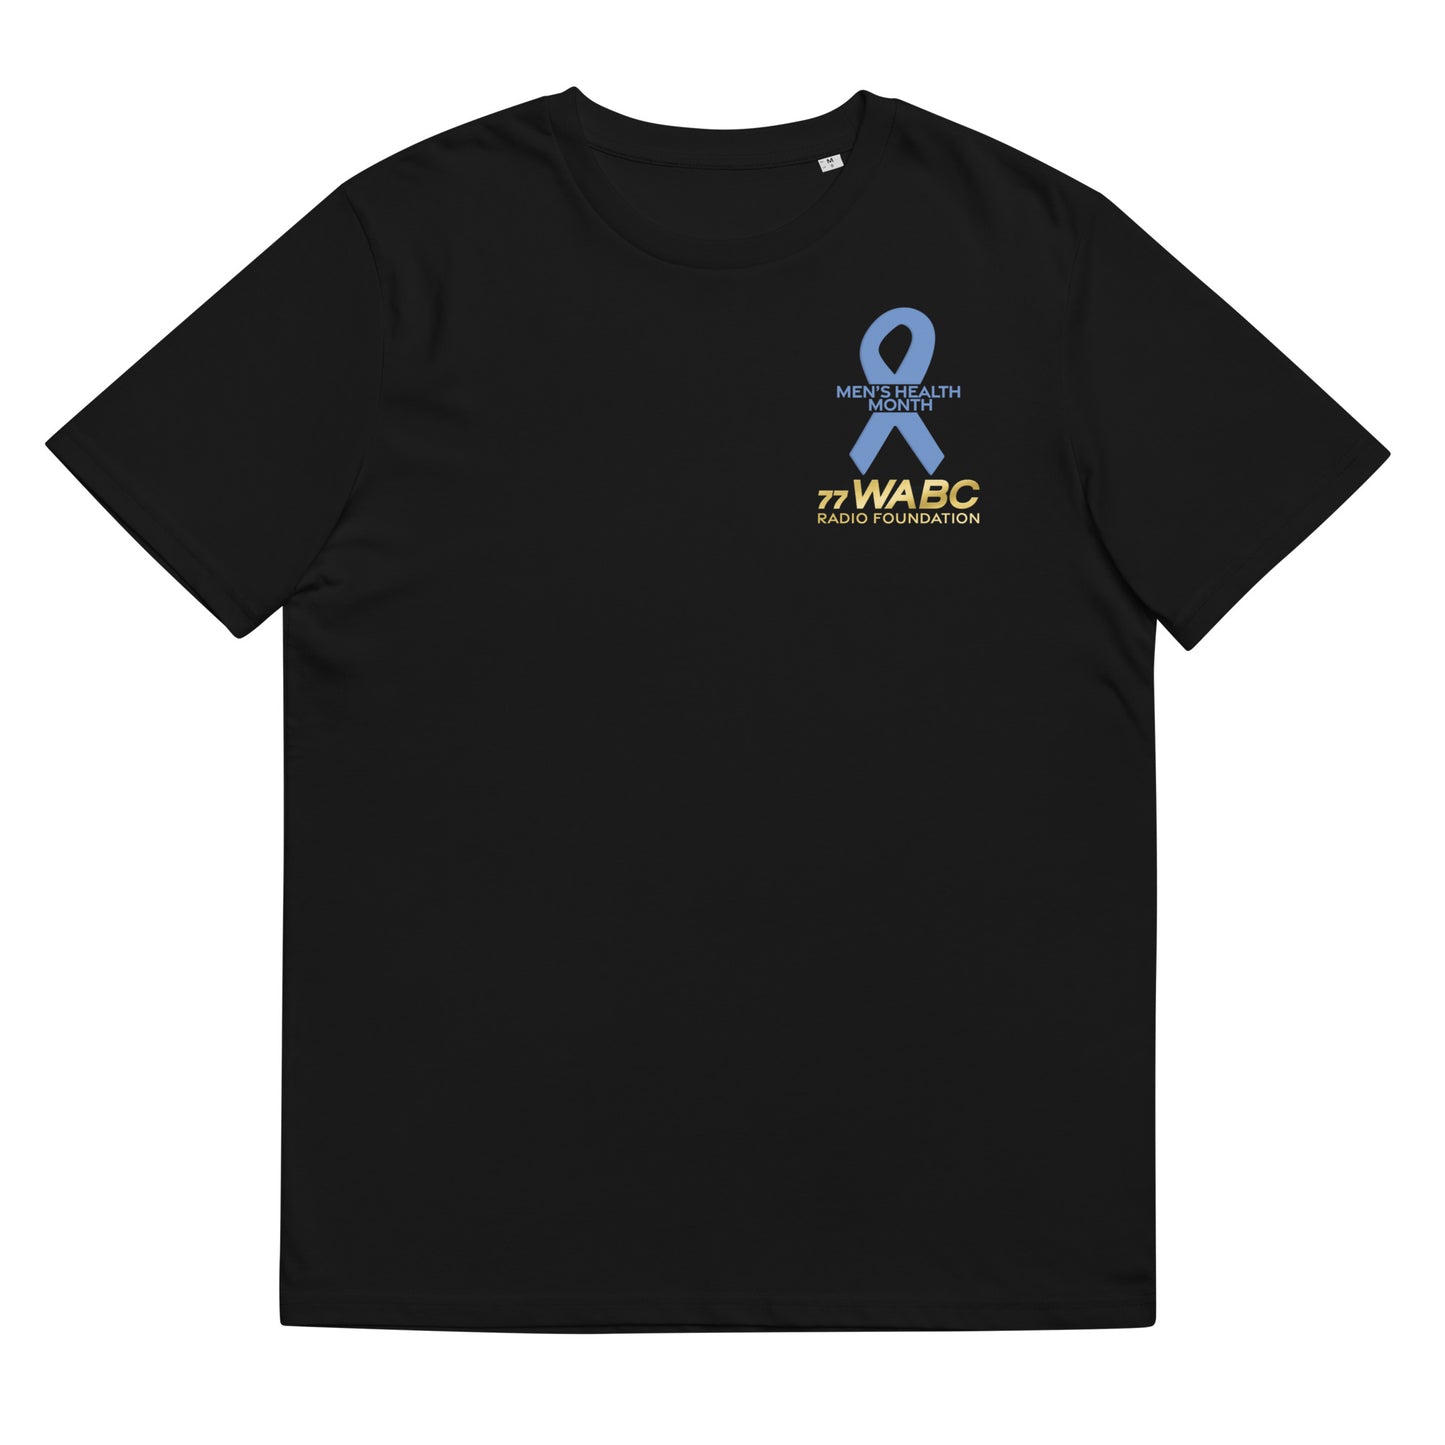 Men's Health Awareness Shirt - WABC Radio Foundation